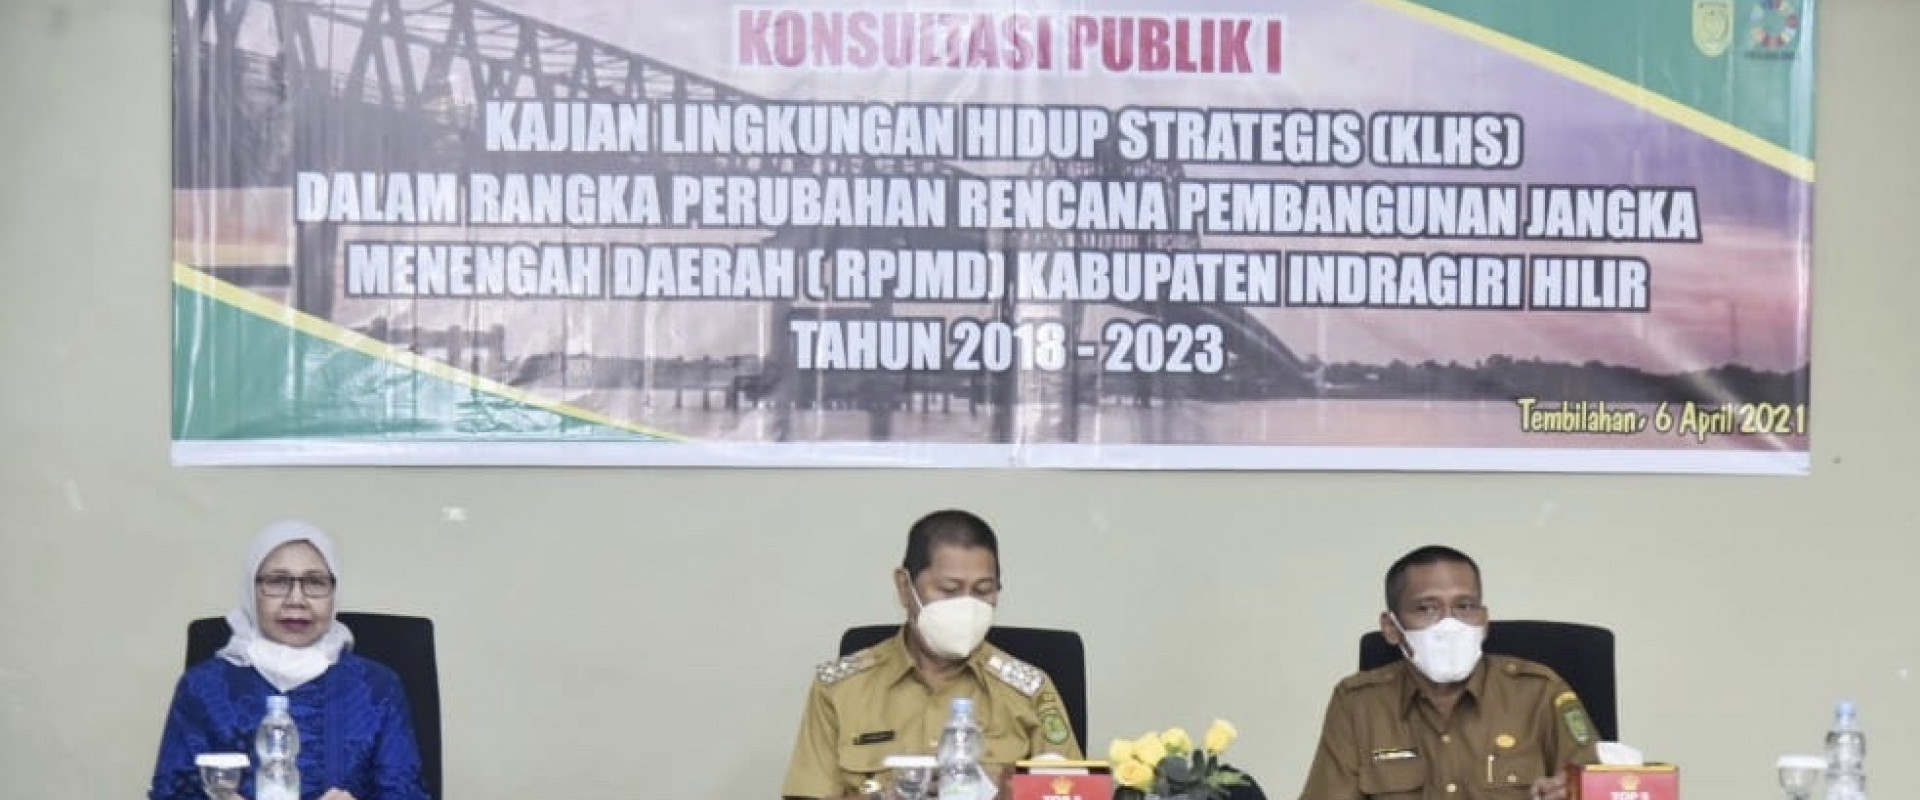 Wakil Bupati Syamsudin Uti Buka Konsultasi Publik Kajian Lingkungan Hidup Strategis (KLHS)